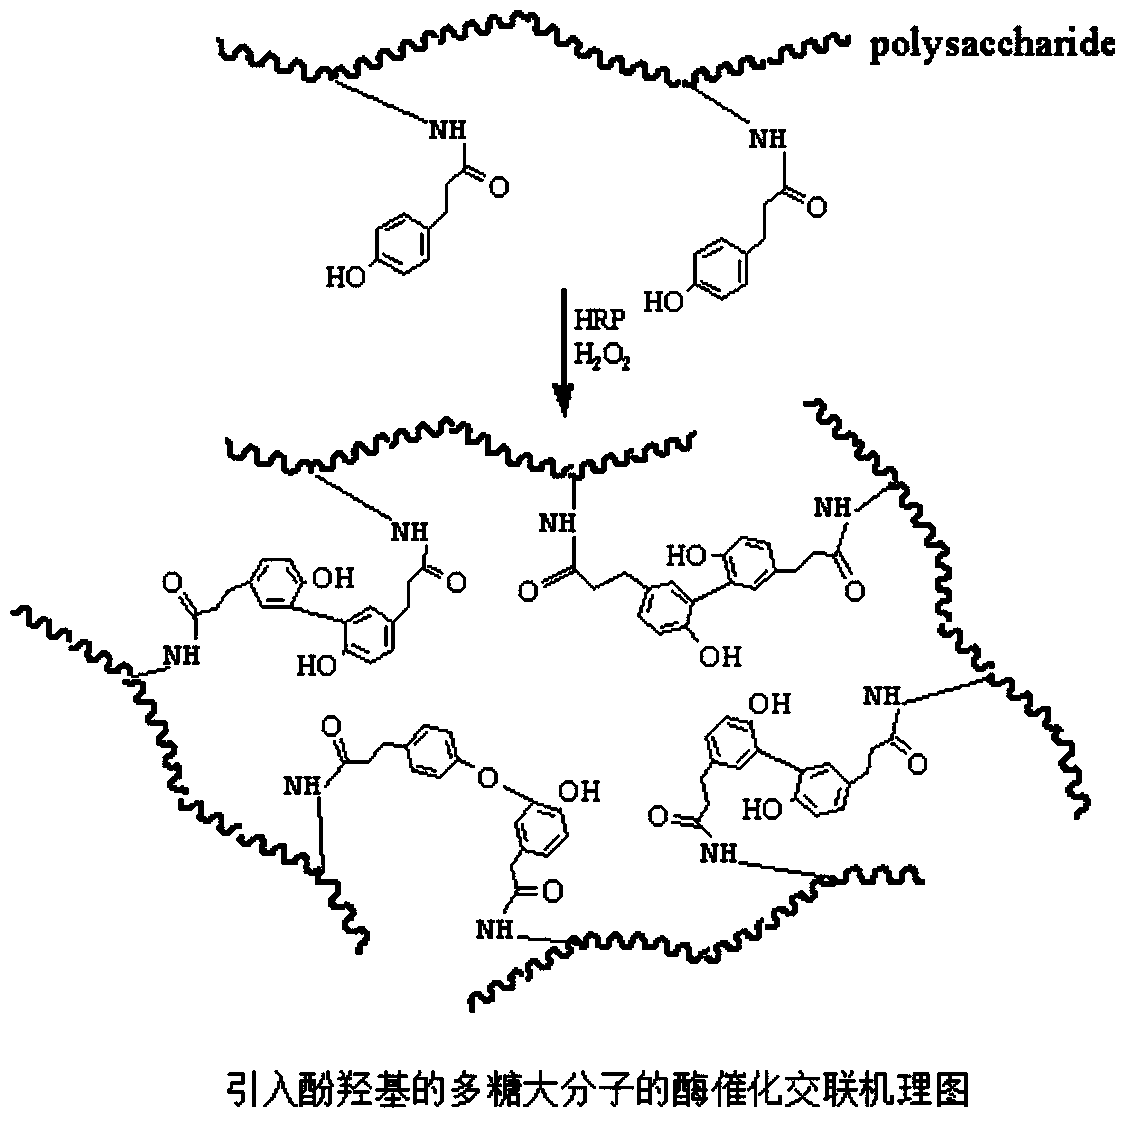 Biomacromolecule interpenetrating polymer network hydrogel and preparation method thereof